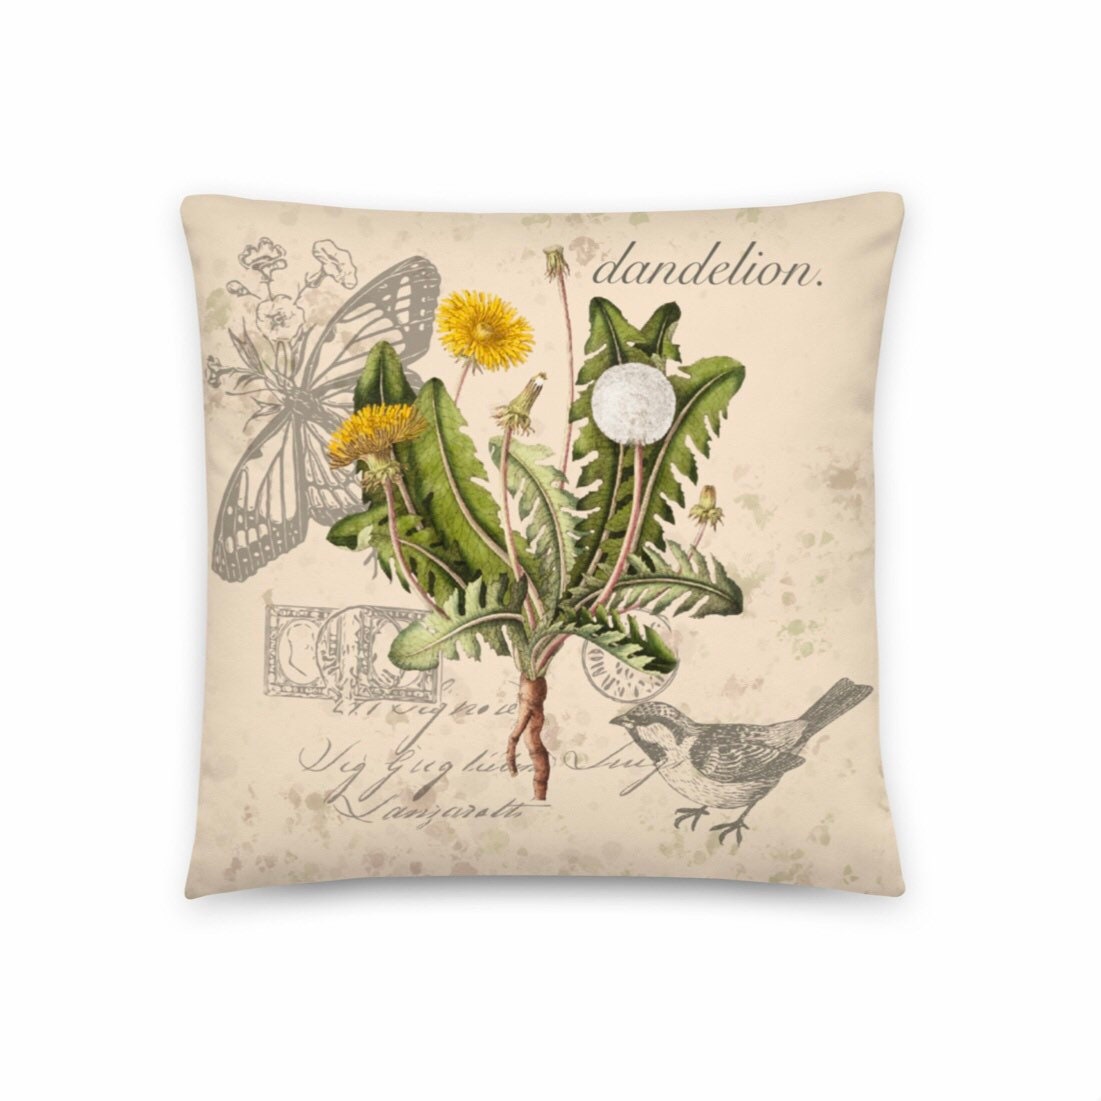 Vintage Botanical Dandelion Throw Pillow - Illustration Flower Decoration - Garden Themed Gift Idea - Birds and Butterflies Antique Art